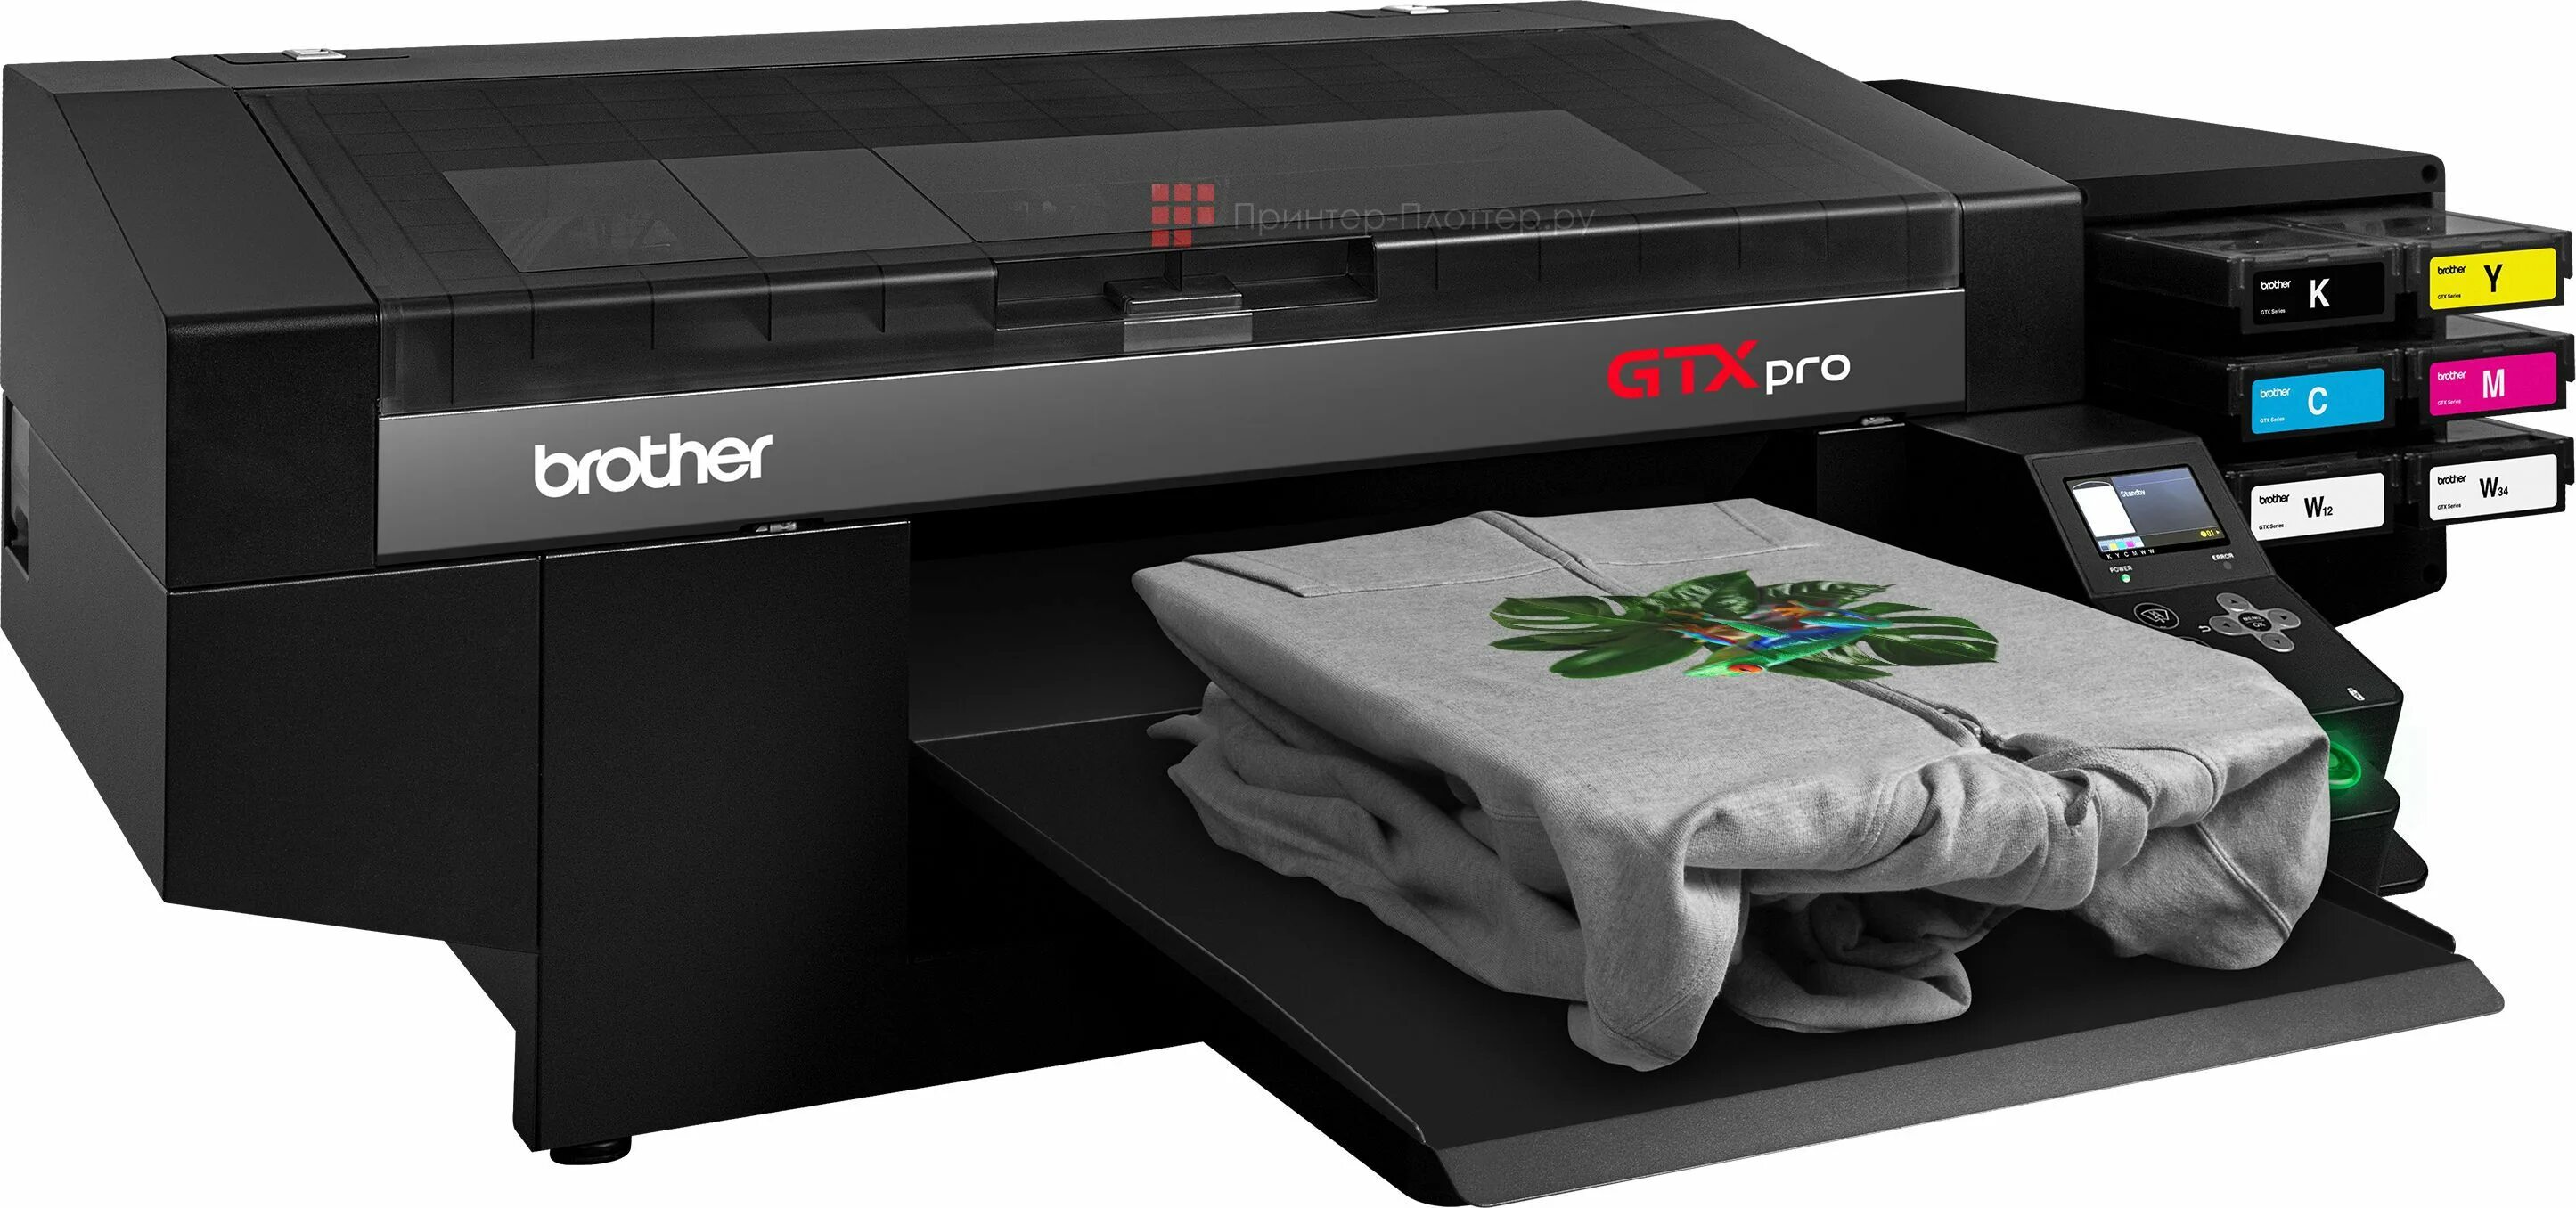 Brother print. Brother GTX 423 Pro. Текстильный принтер Бразер GTX. Текстильный принтер DTG Pro. Brother GTX-423 (GTX Pro).